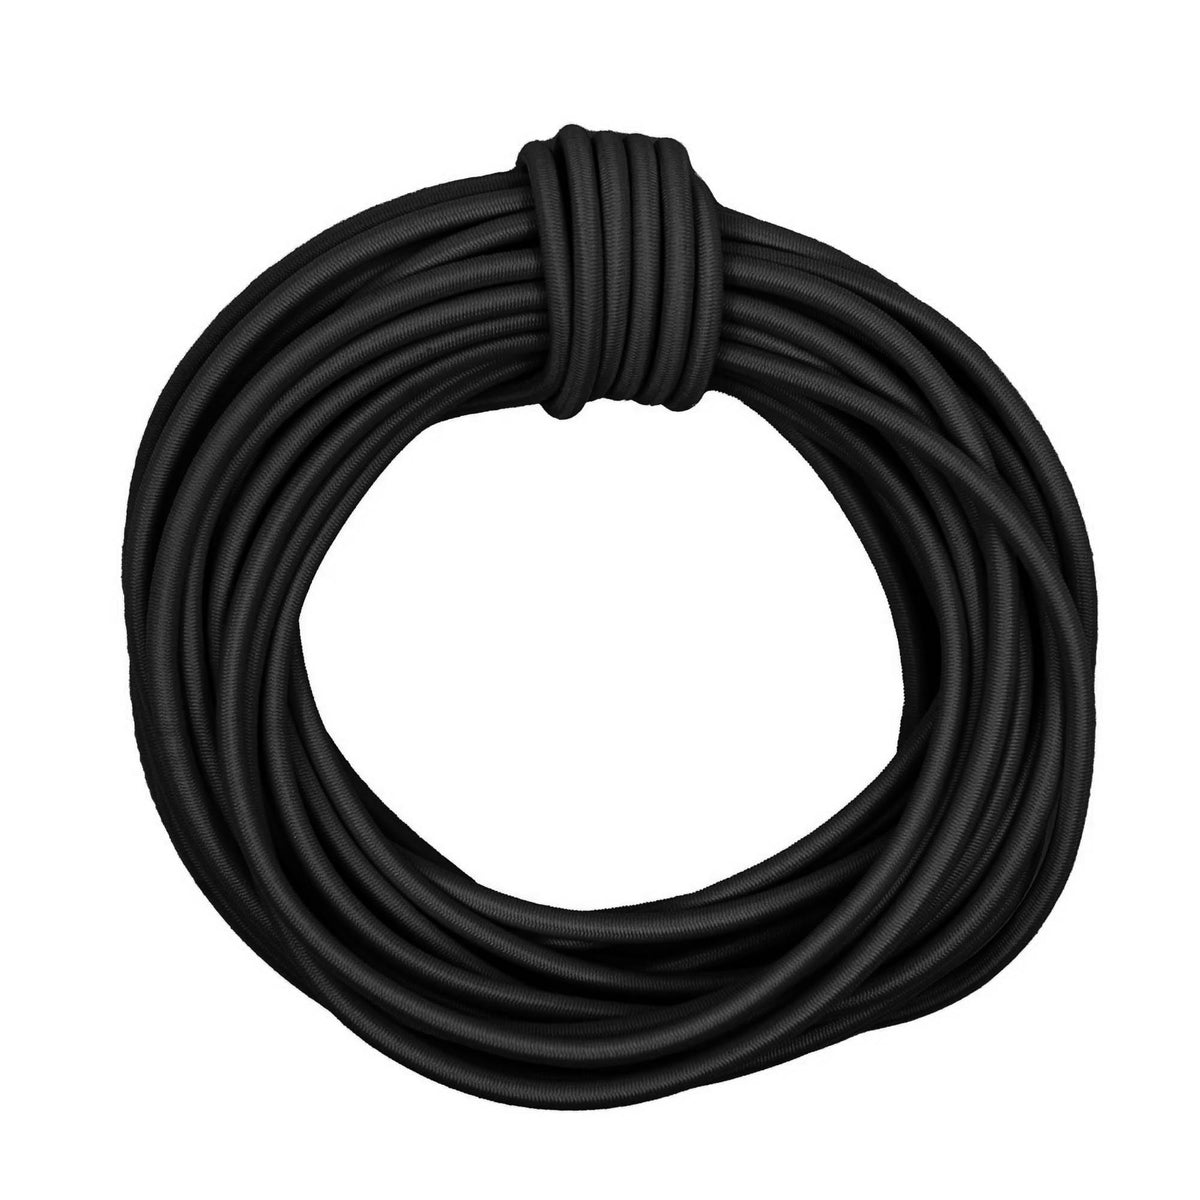 Polypropylene Covered Elastic Cord #M-3 Black 3/16 x 300' Black